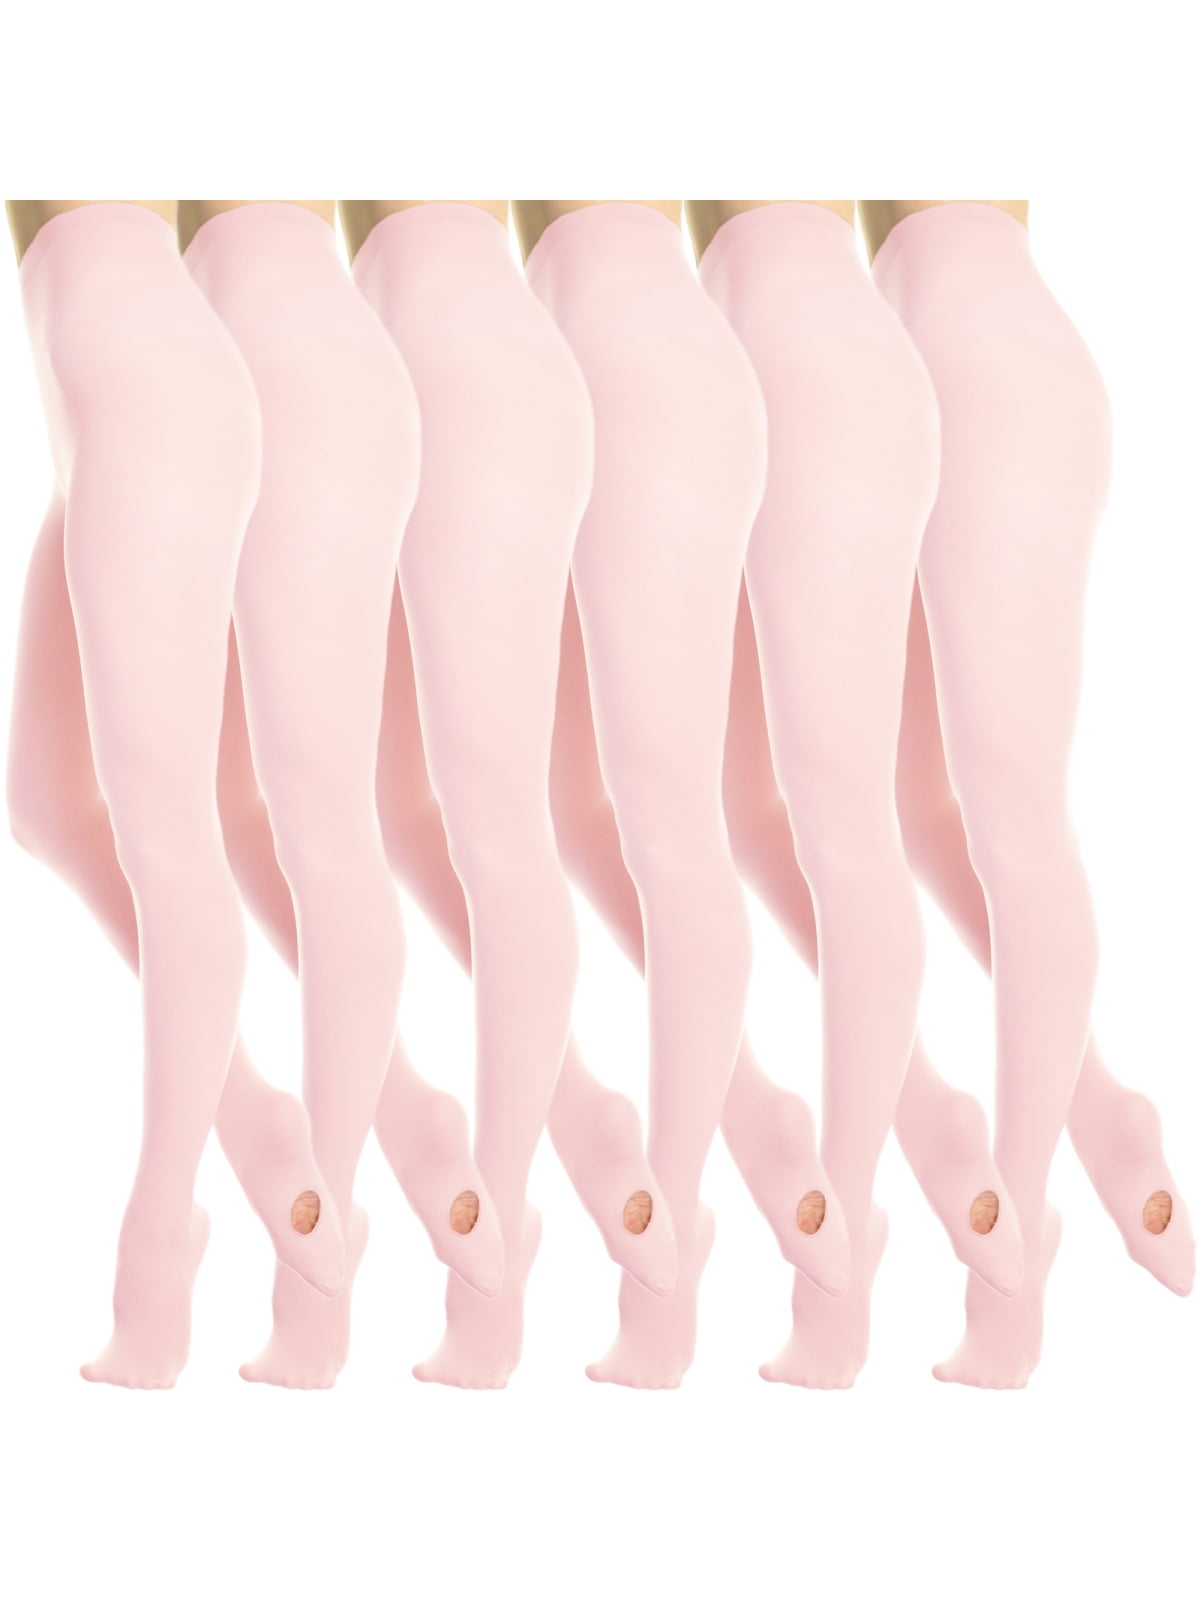 Professional 80 Denier Kids Girl's Pink Ballet Dance Tights FULL FOOT 